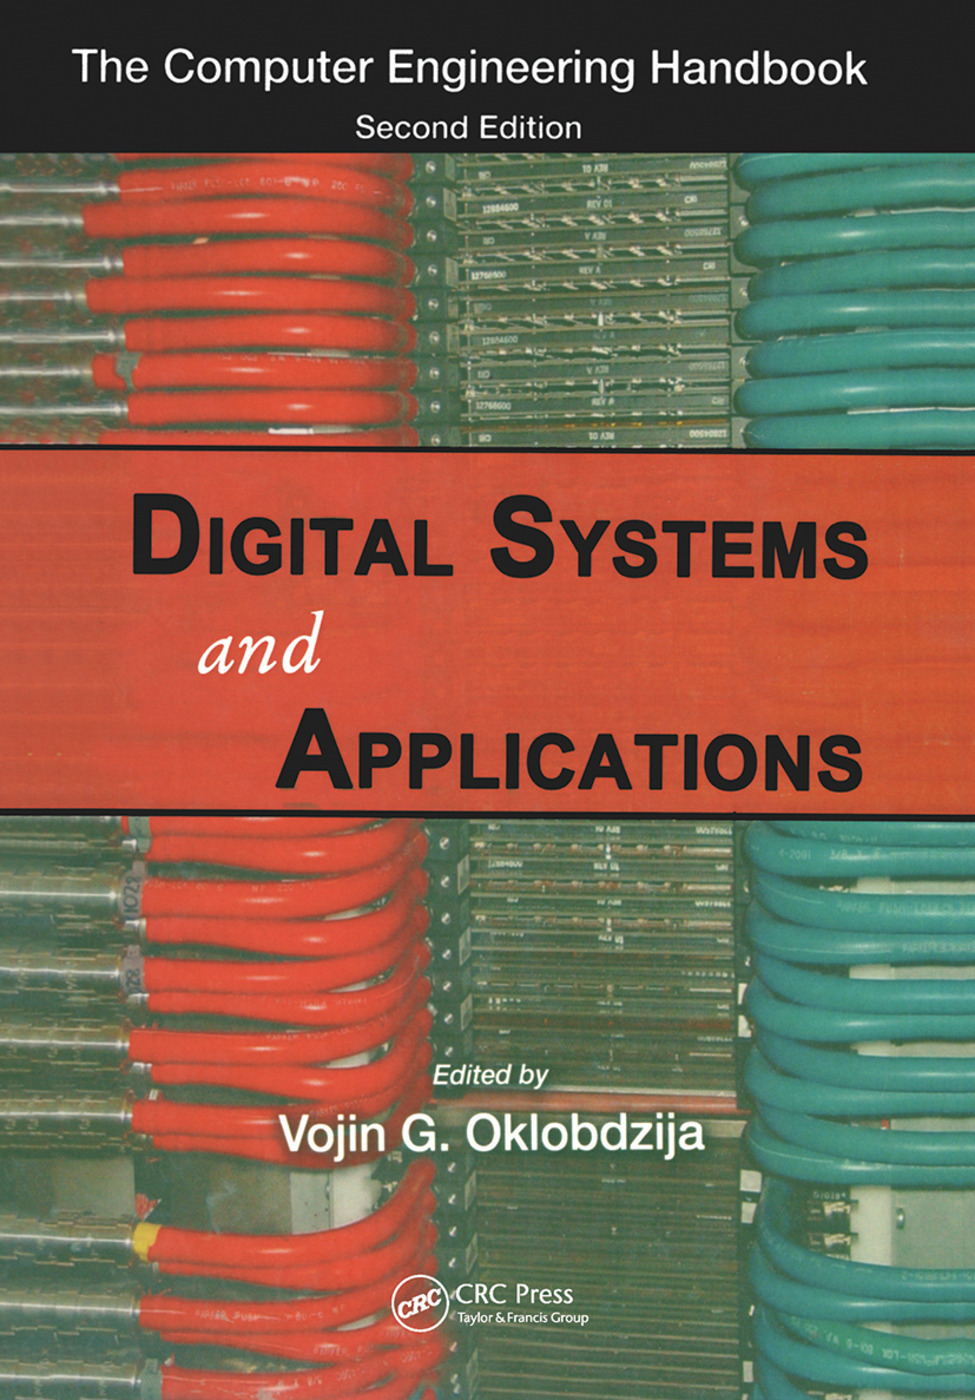 Digital Systems and Applications by Vojin G. Oklobdzija